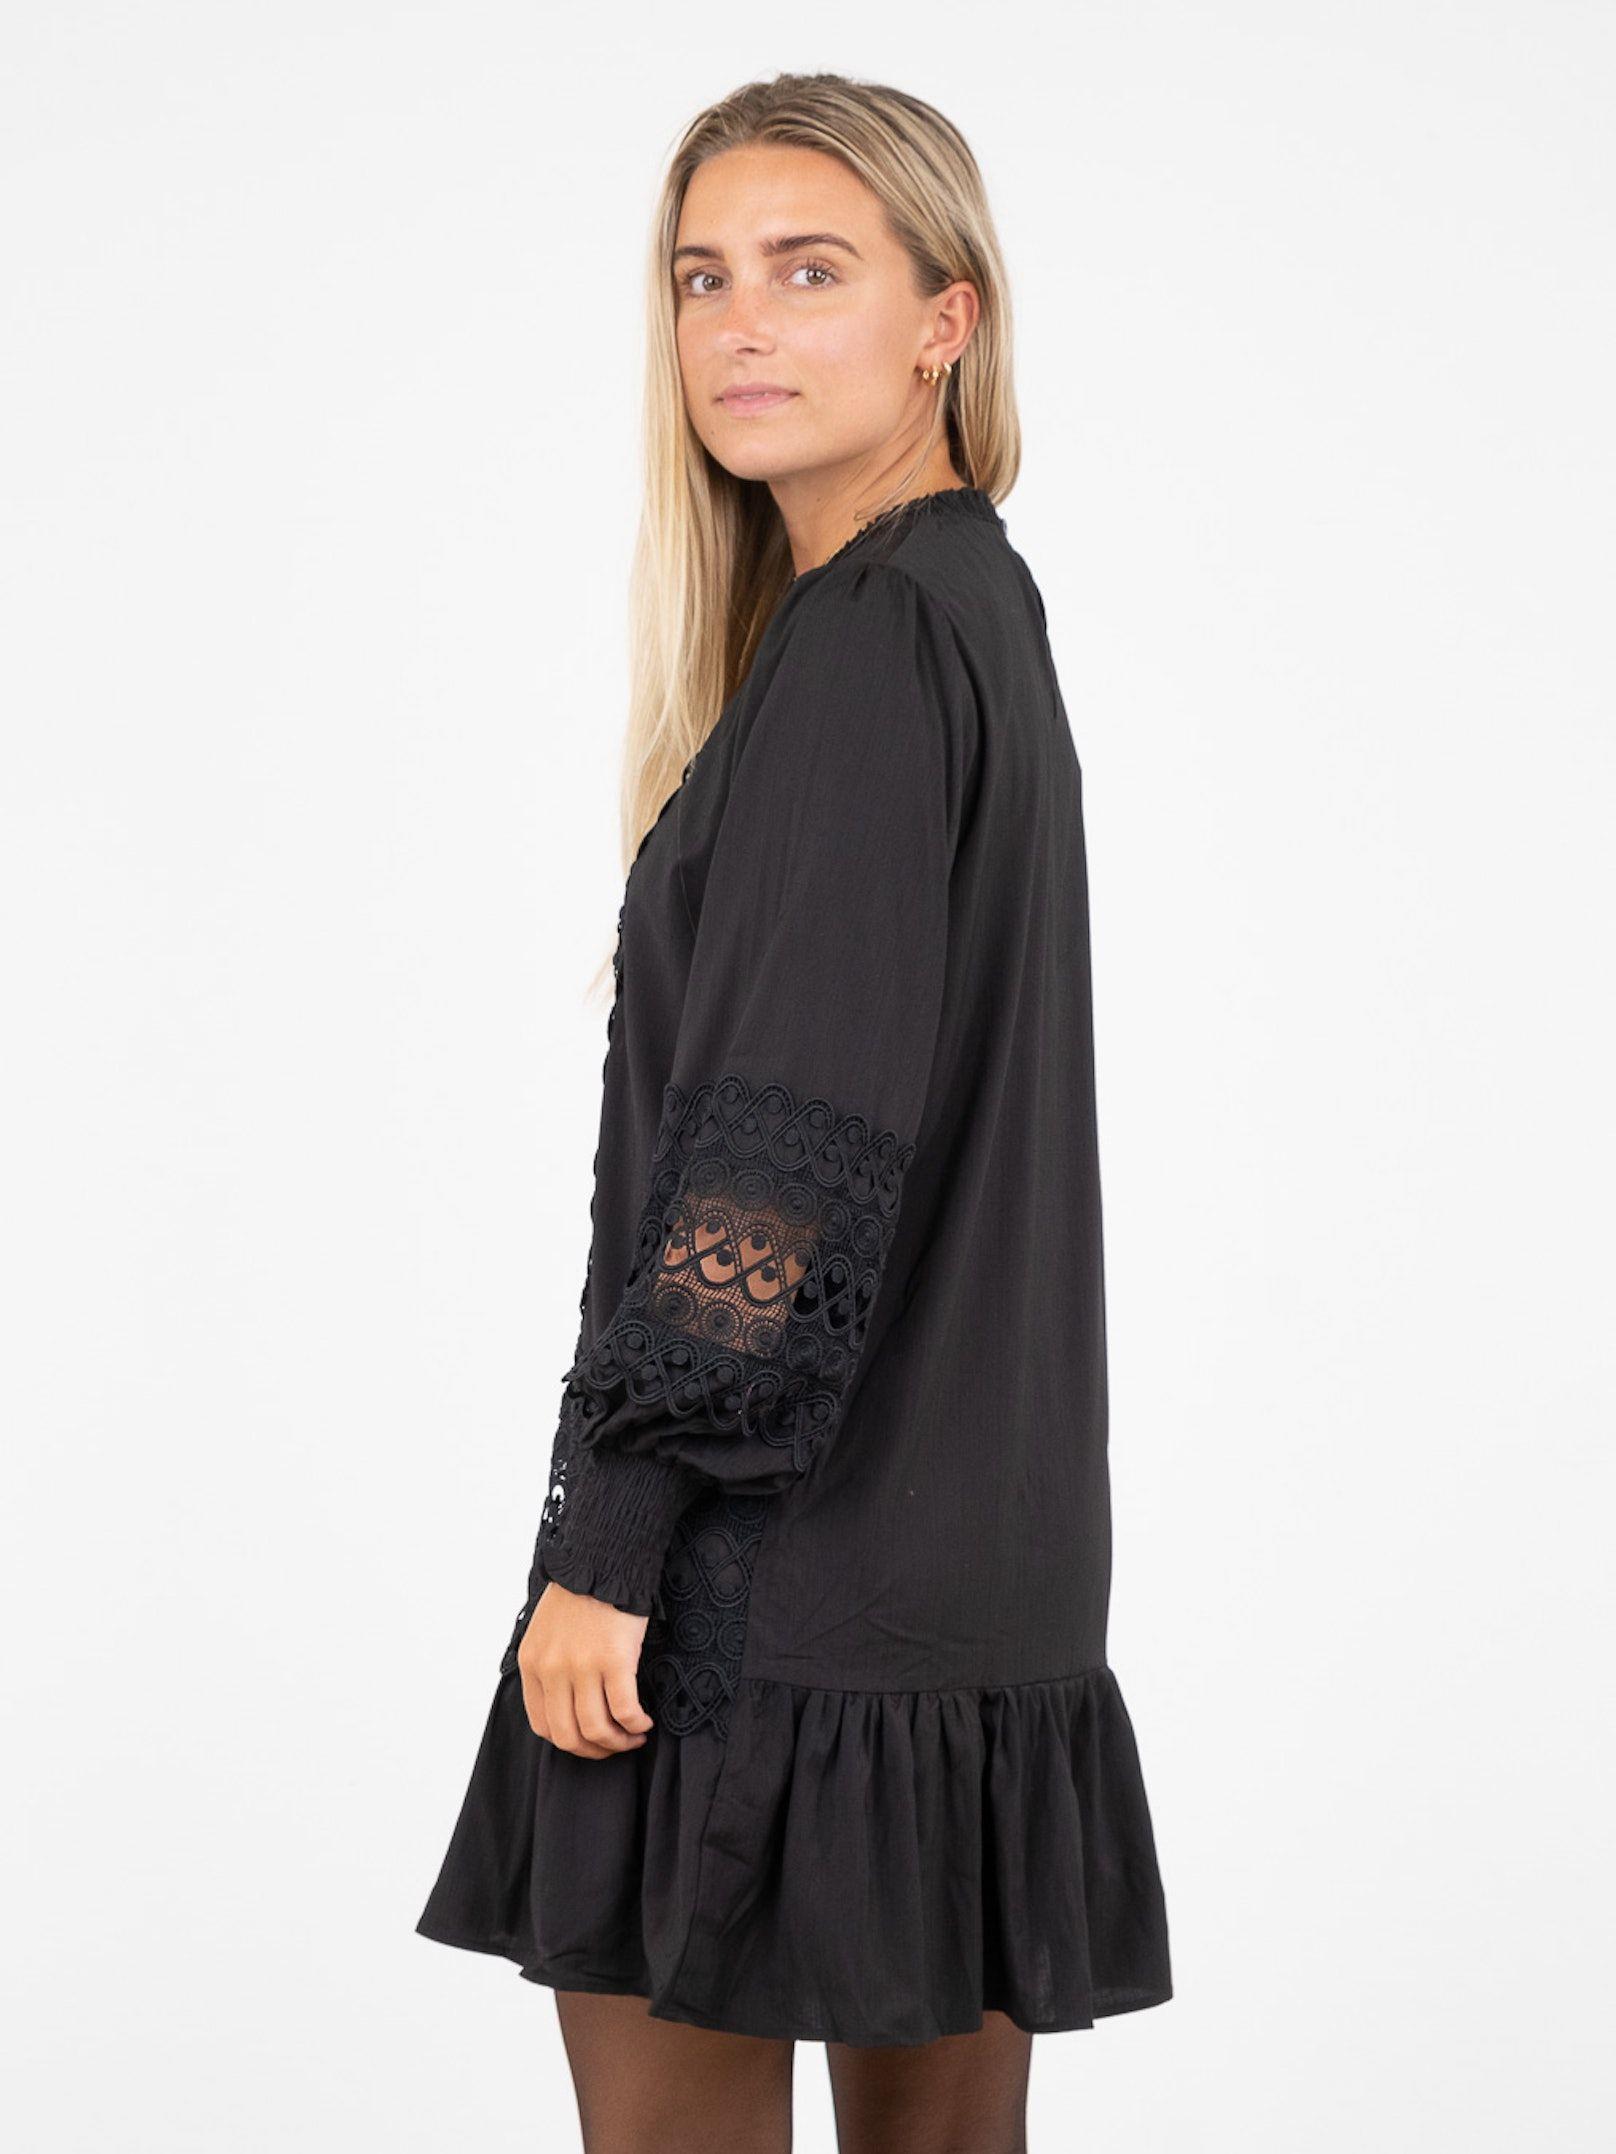 Maiden Styre vindruer Neo Noir - Katja Embroidery Dress Black